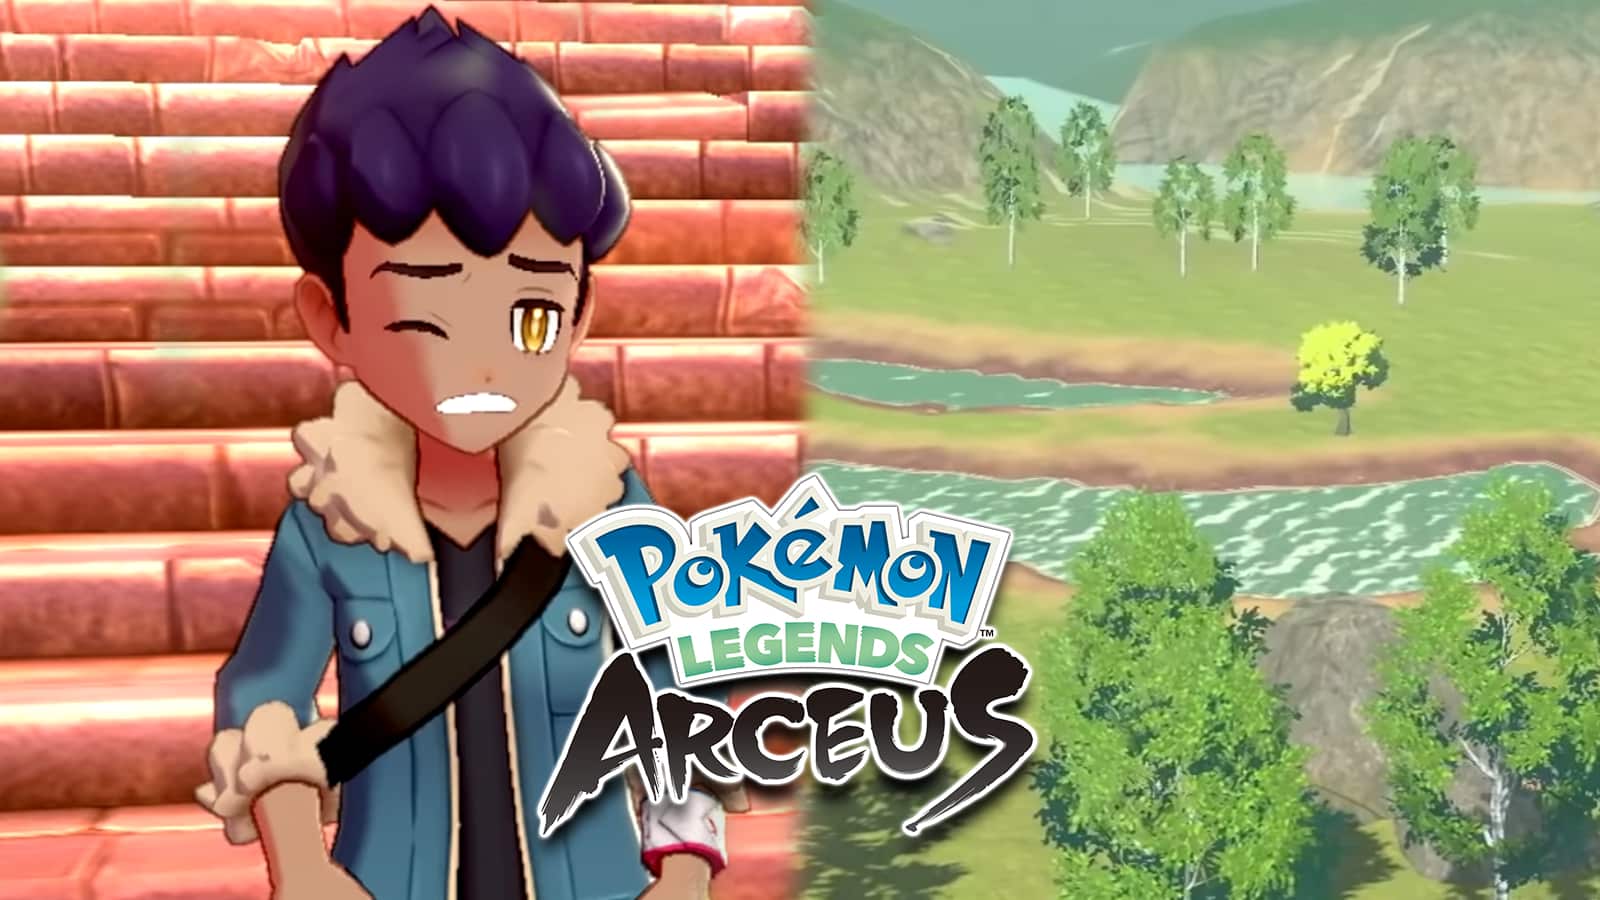 Pokemon Sword & Shield hop next to Pokemon Legends Arceus trailer map screenshot